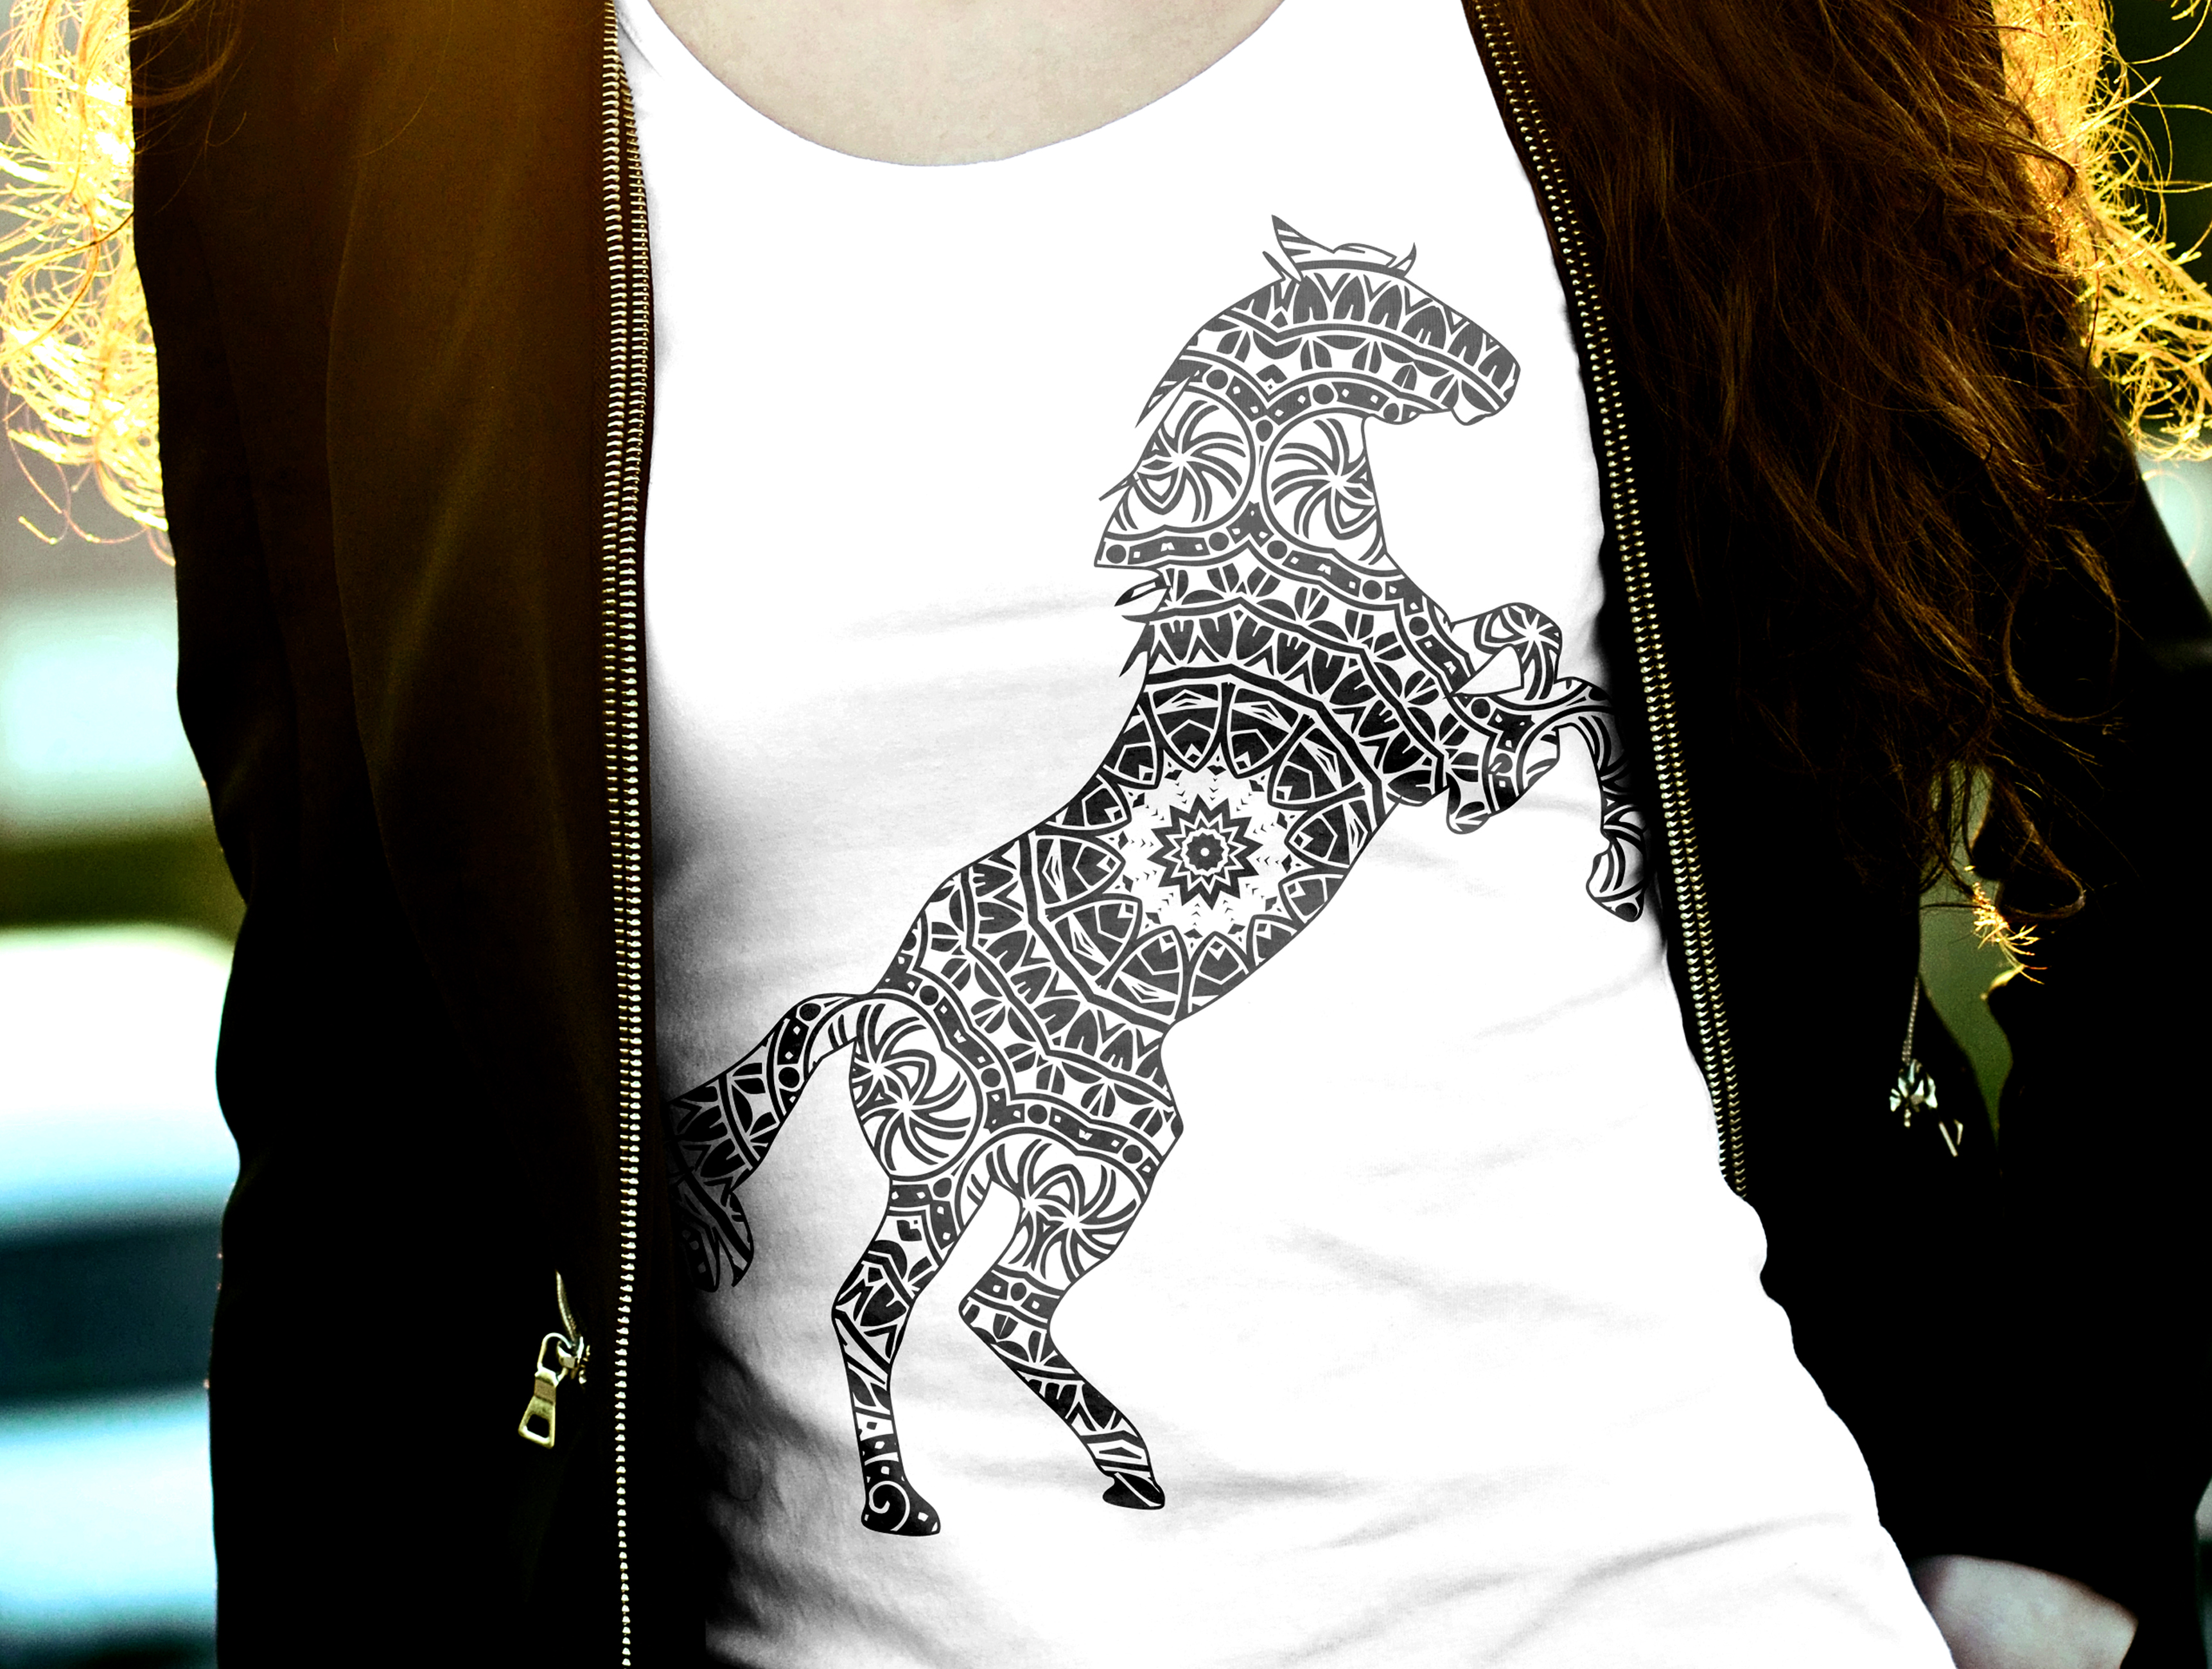 Download Cute Horse Mandala Svg - Layered SVG Cut File